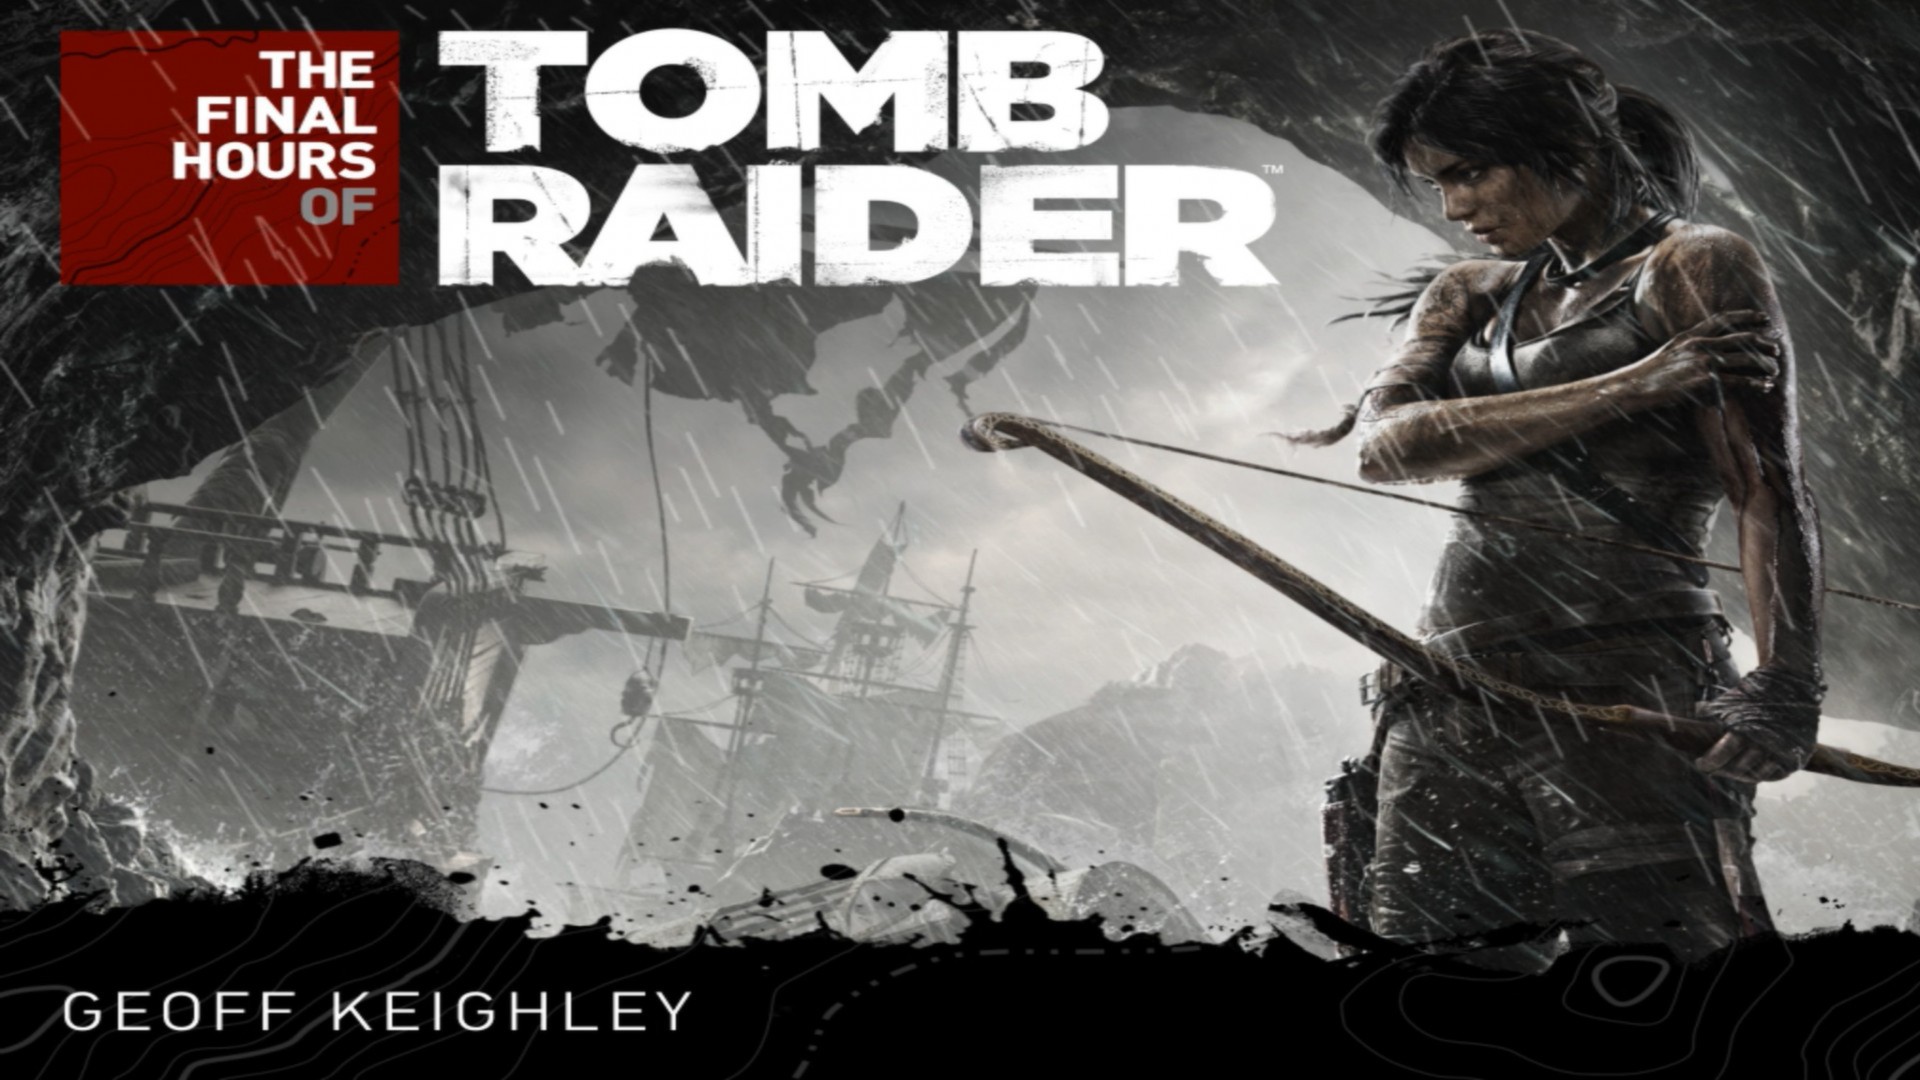 Tomb Raider - The Final Hours Digital Book Featured Screenshot #1